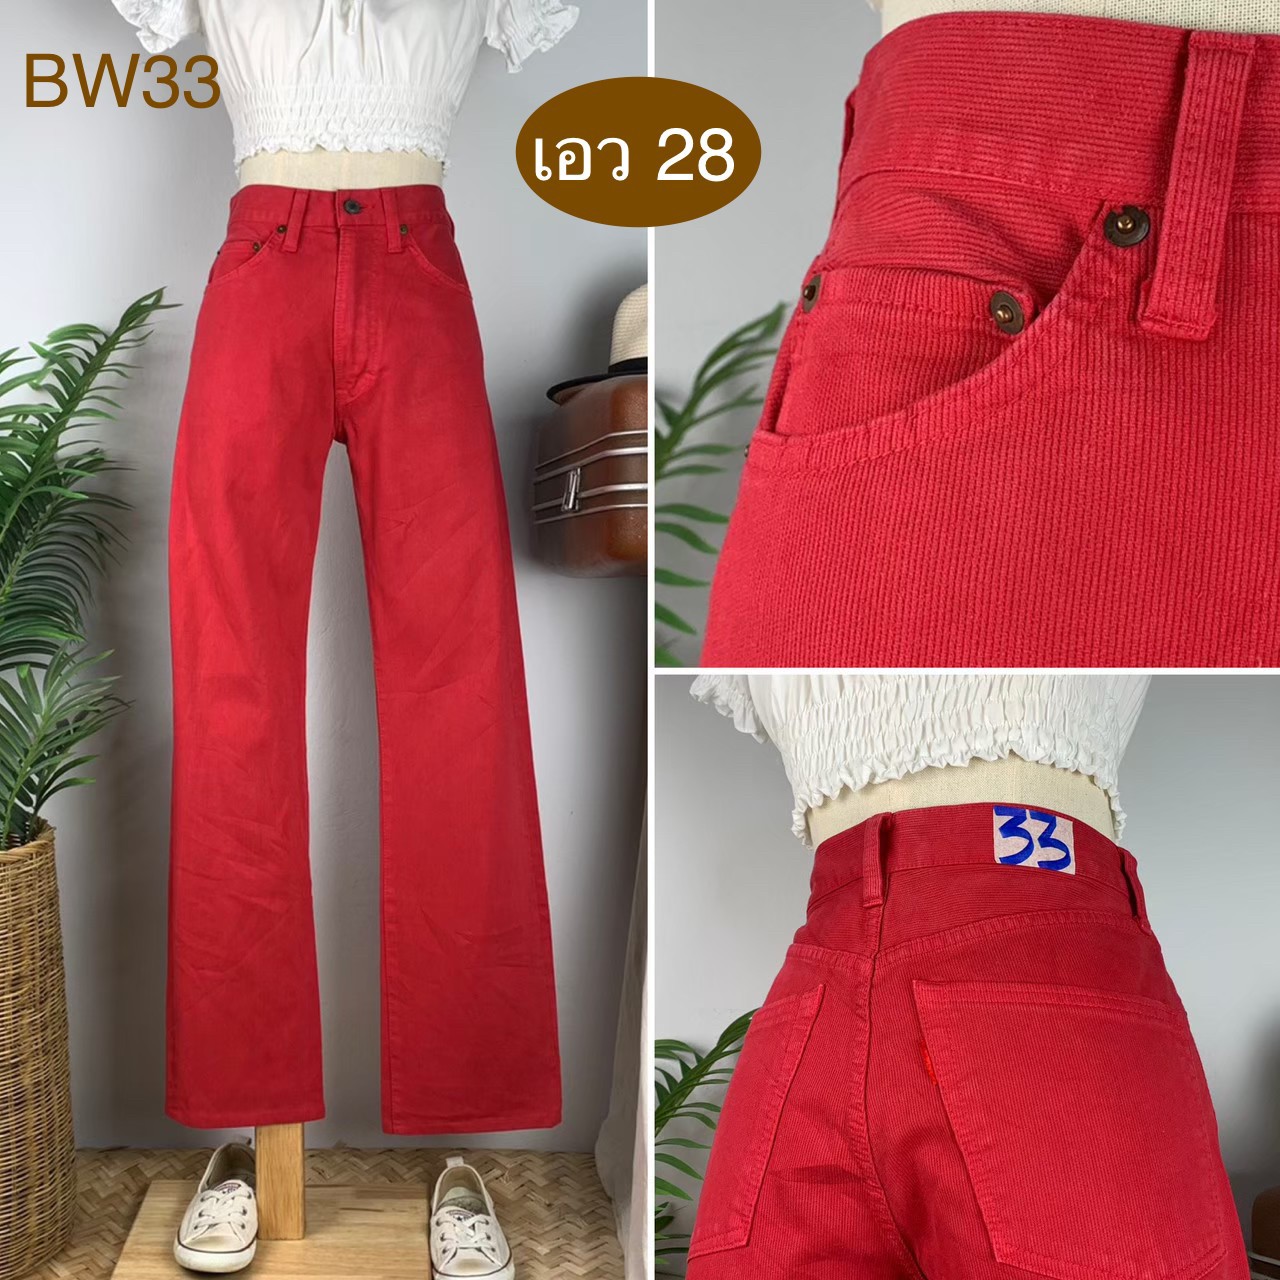 ♥️ รหัสBW33 ▪️ป้าย Jeans  ▪️ เอว 28" สะโพก 36" ต้นขา 21" ▪️เป้า 10.5" ยาว 40" (นิ้ว)